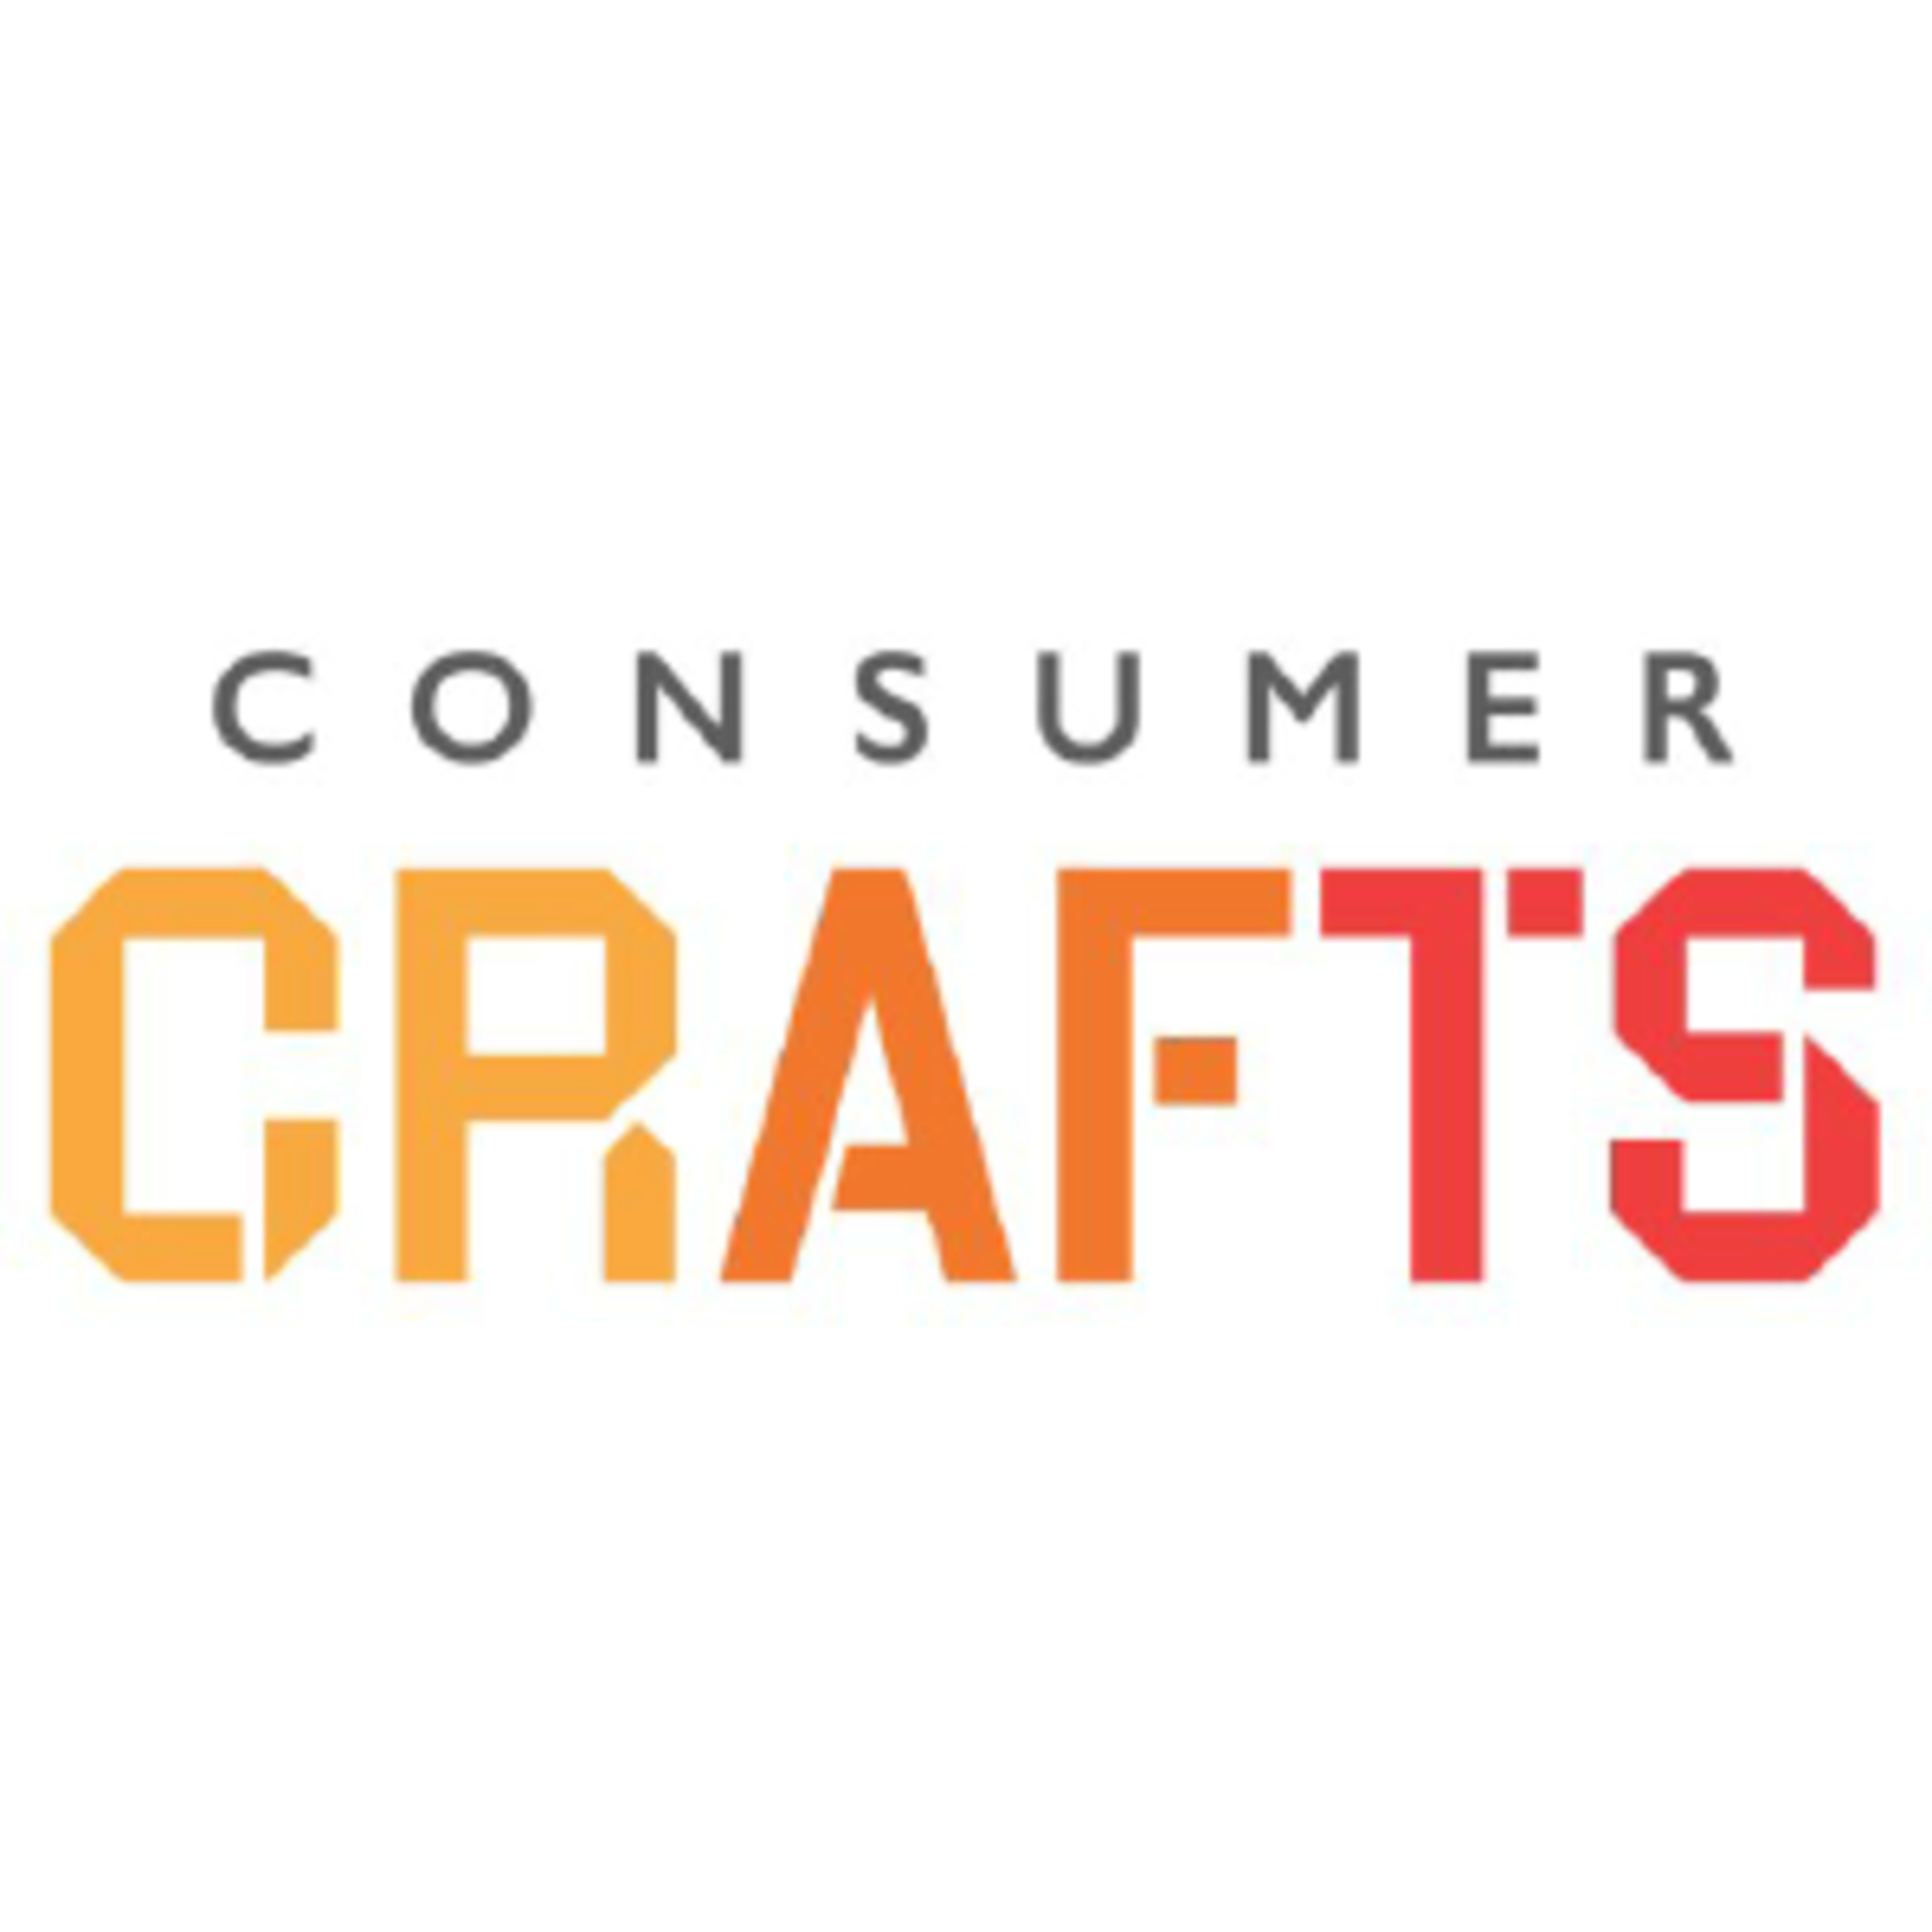 Consumer CraftsCode